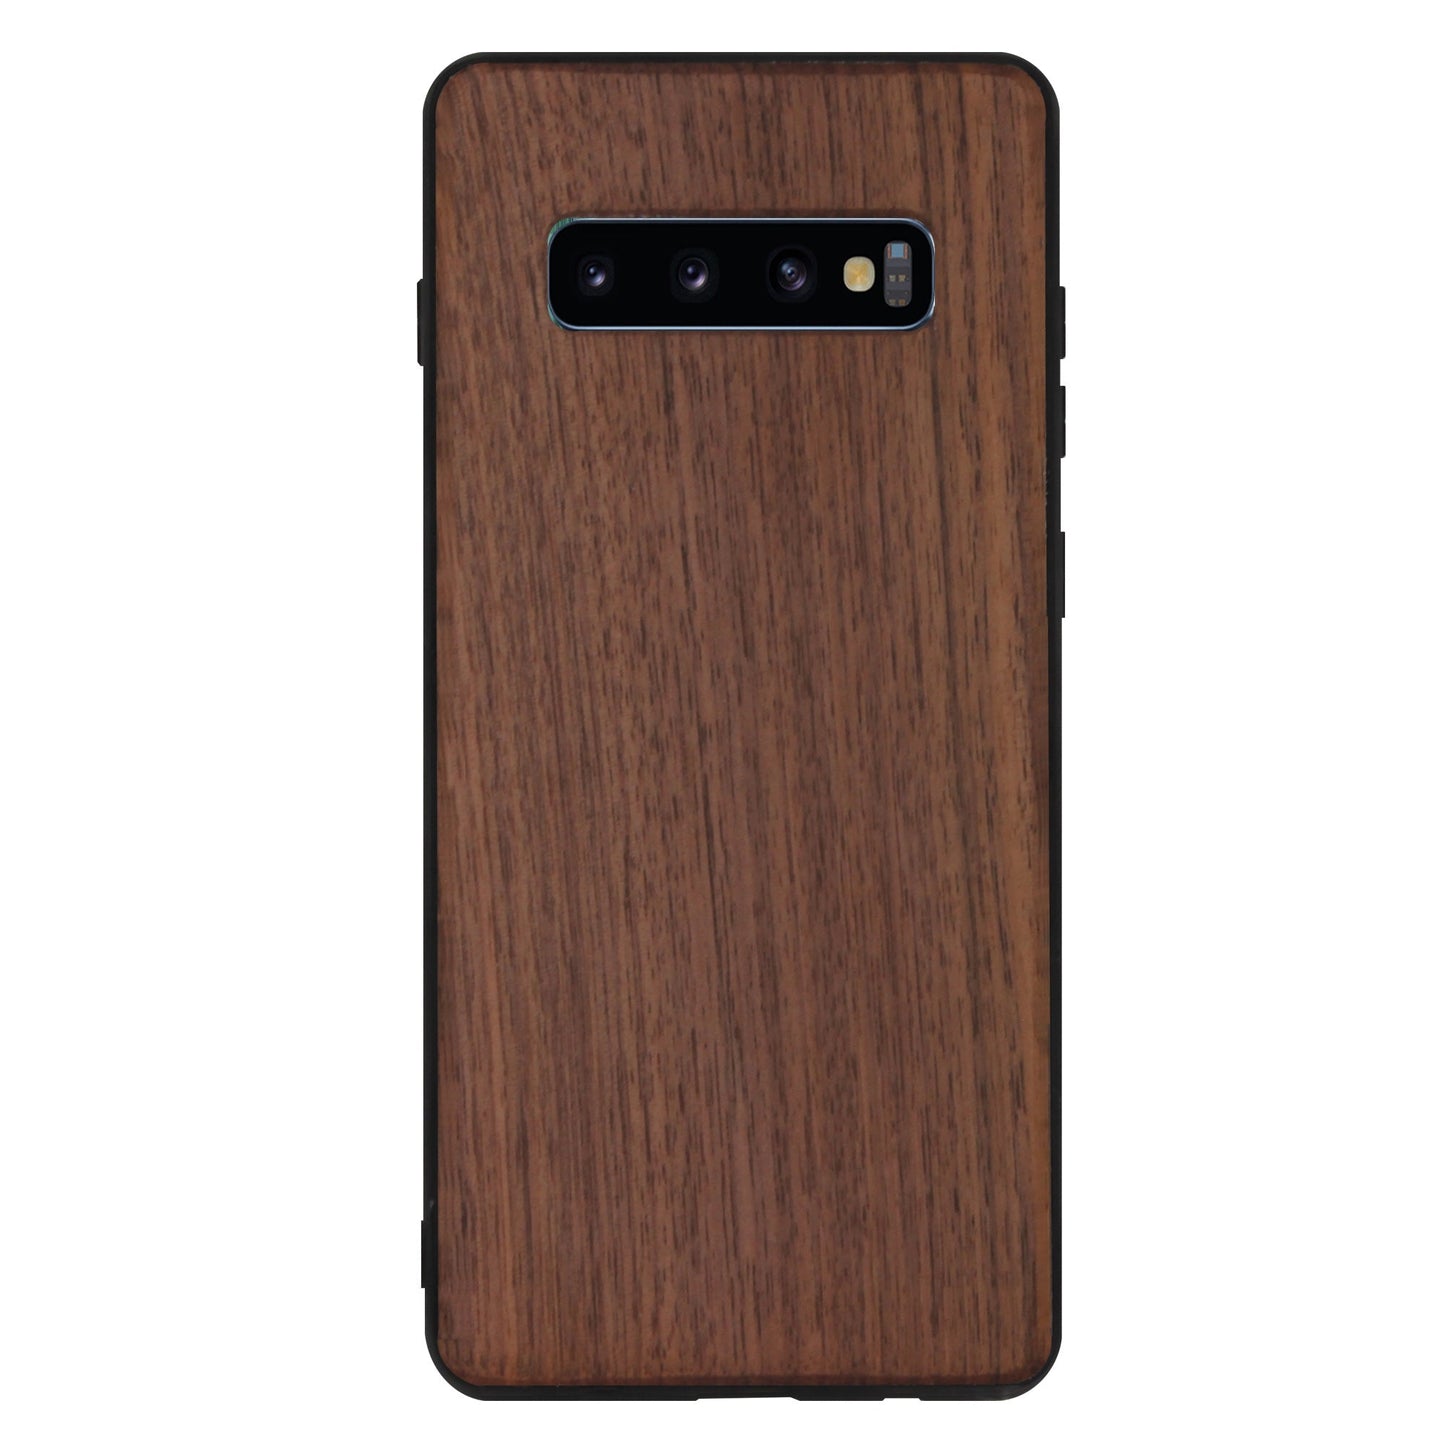 Eden case made of walnut wood for Samsung Galaxy S10